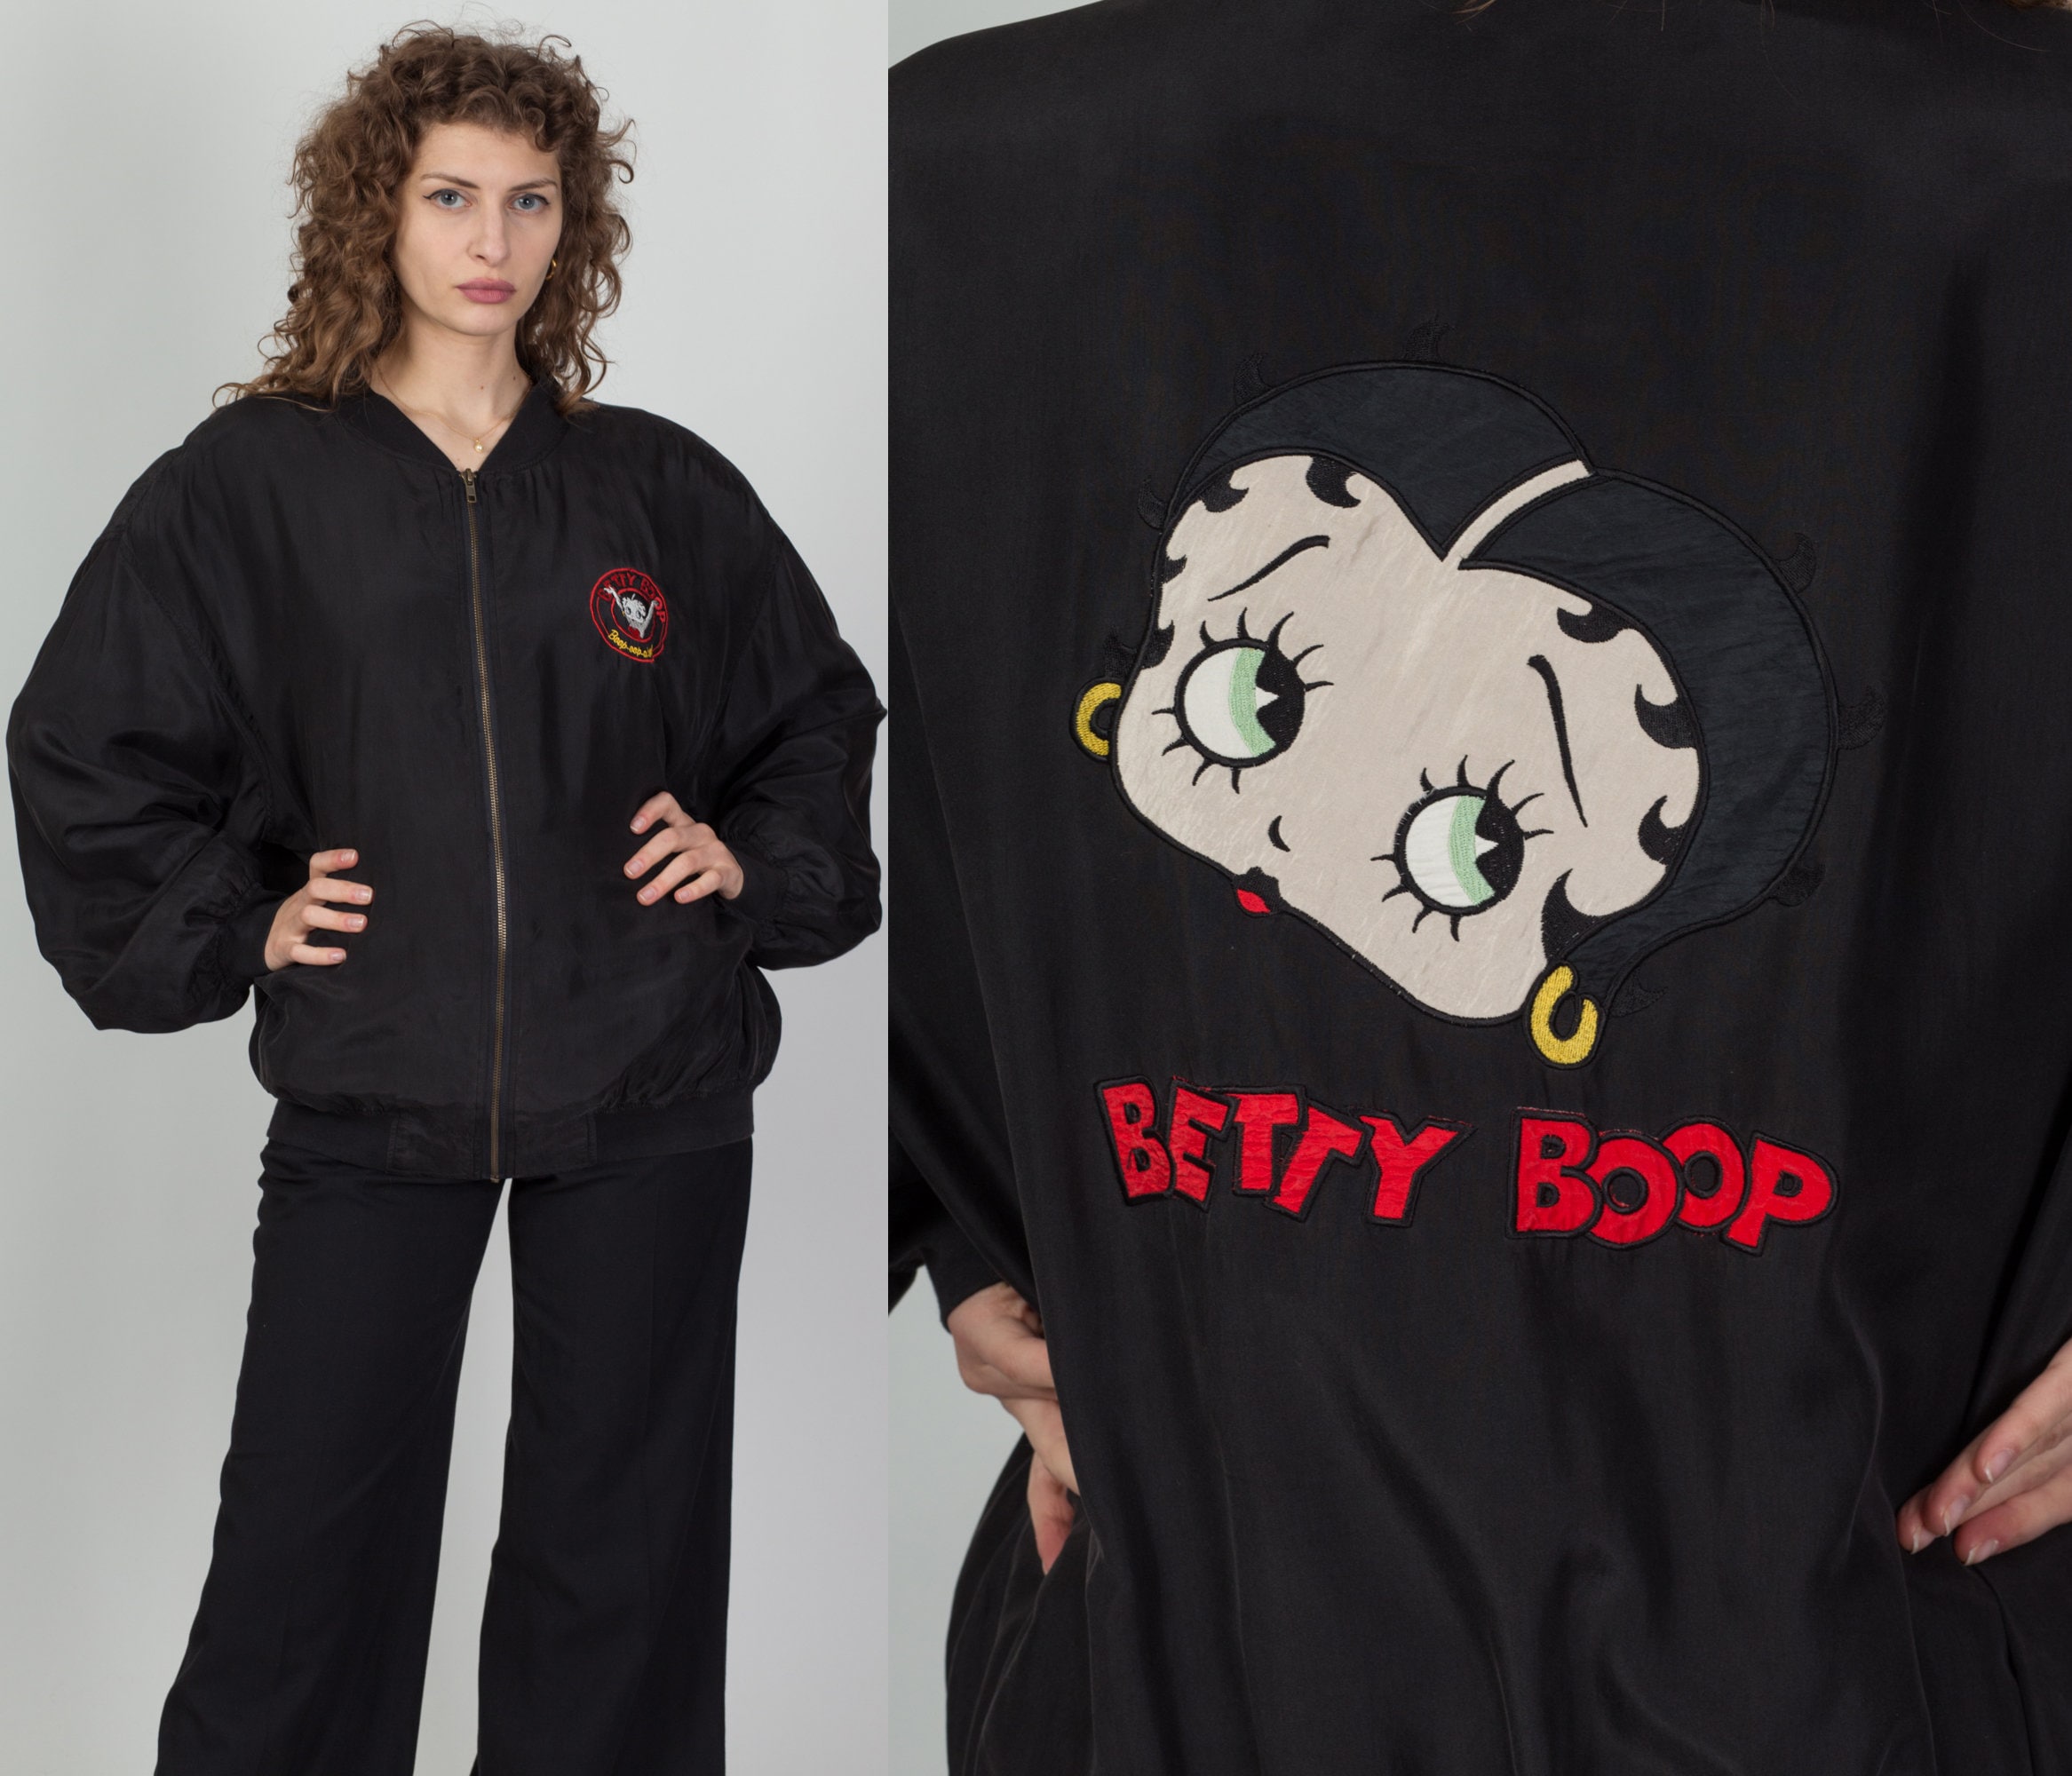 Authentic Apparel Flawed "Betty Boop" Womens Full-Zip Long Sleeve Varsity Jacket 